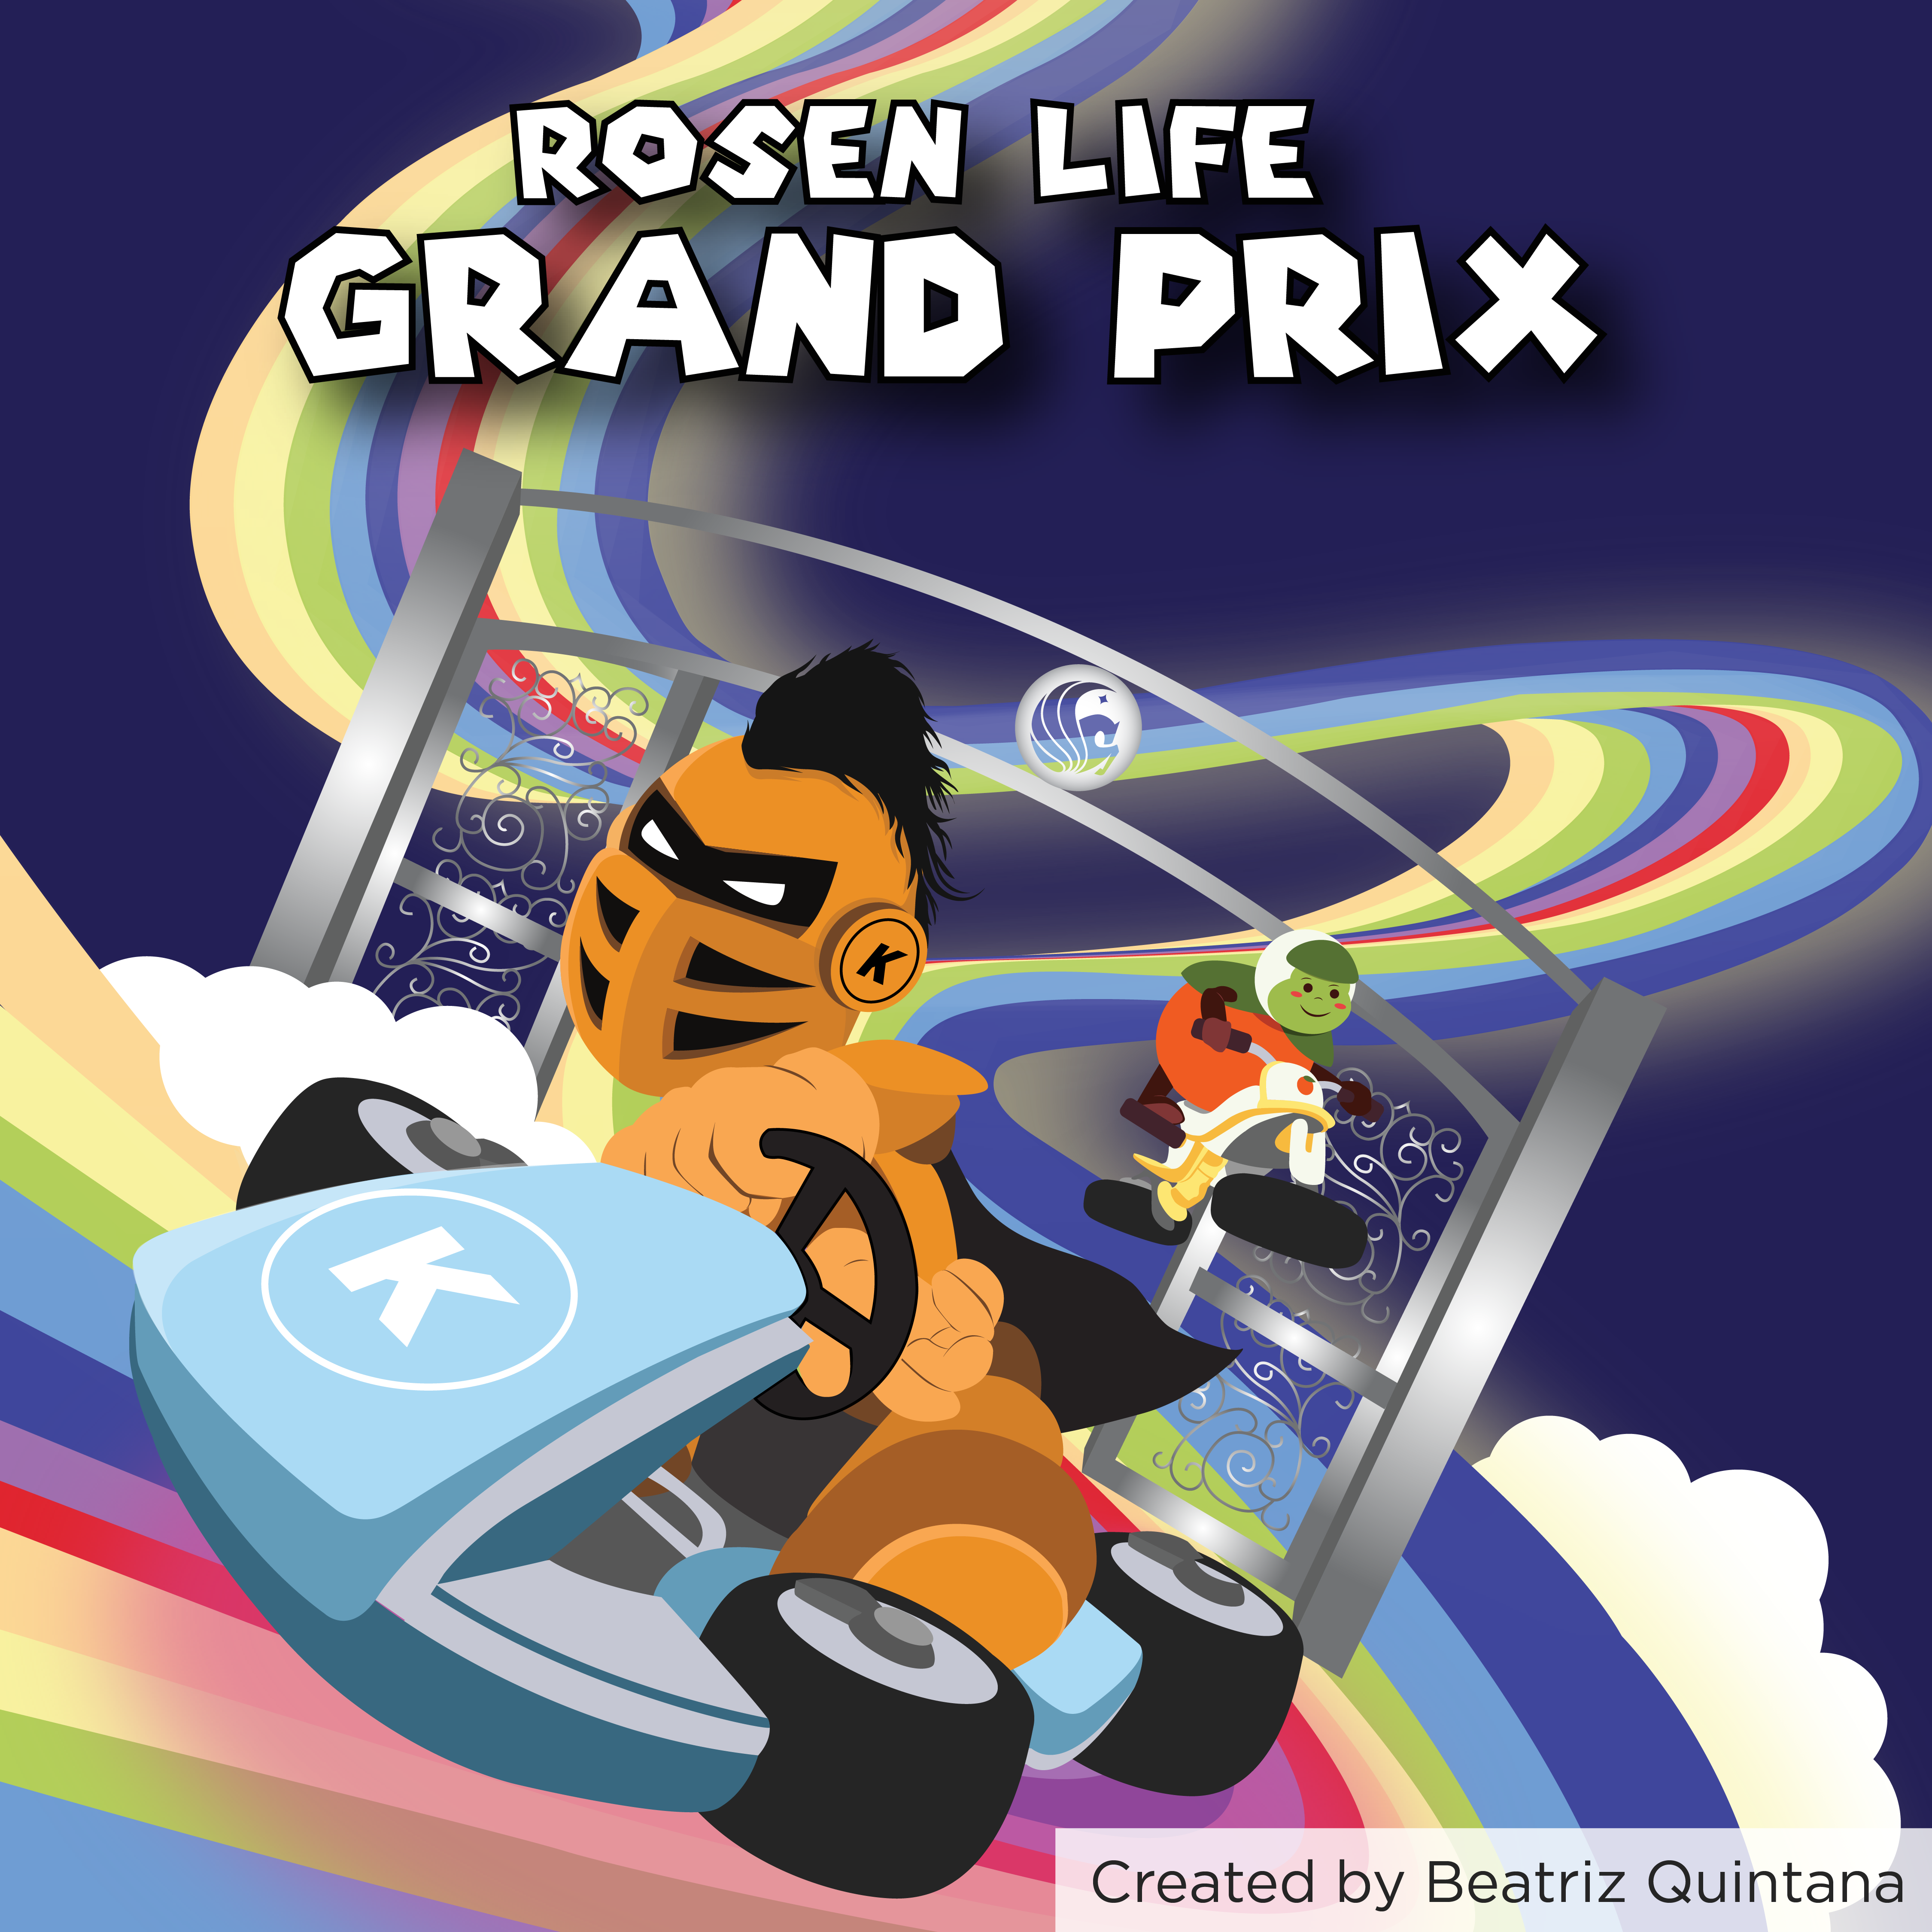 Rosen Life Grand Prix, designed by Beatriz Quintana